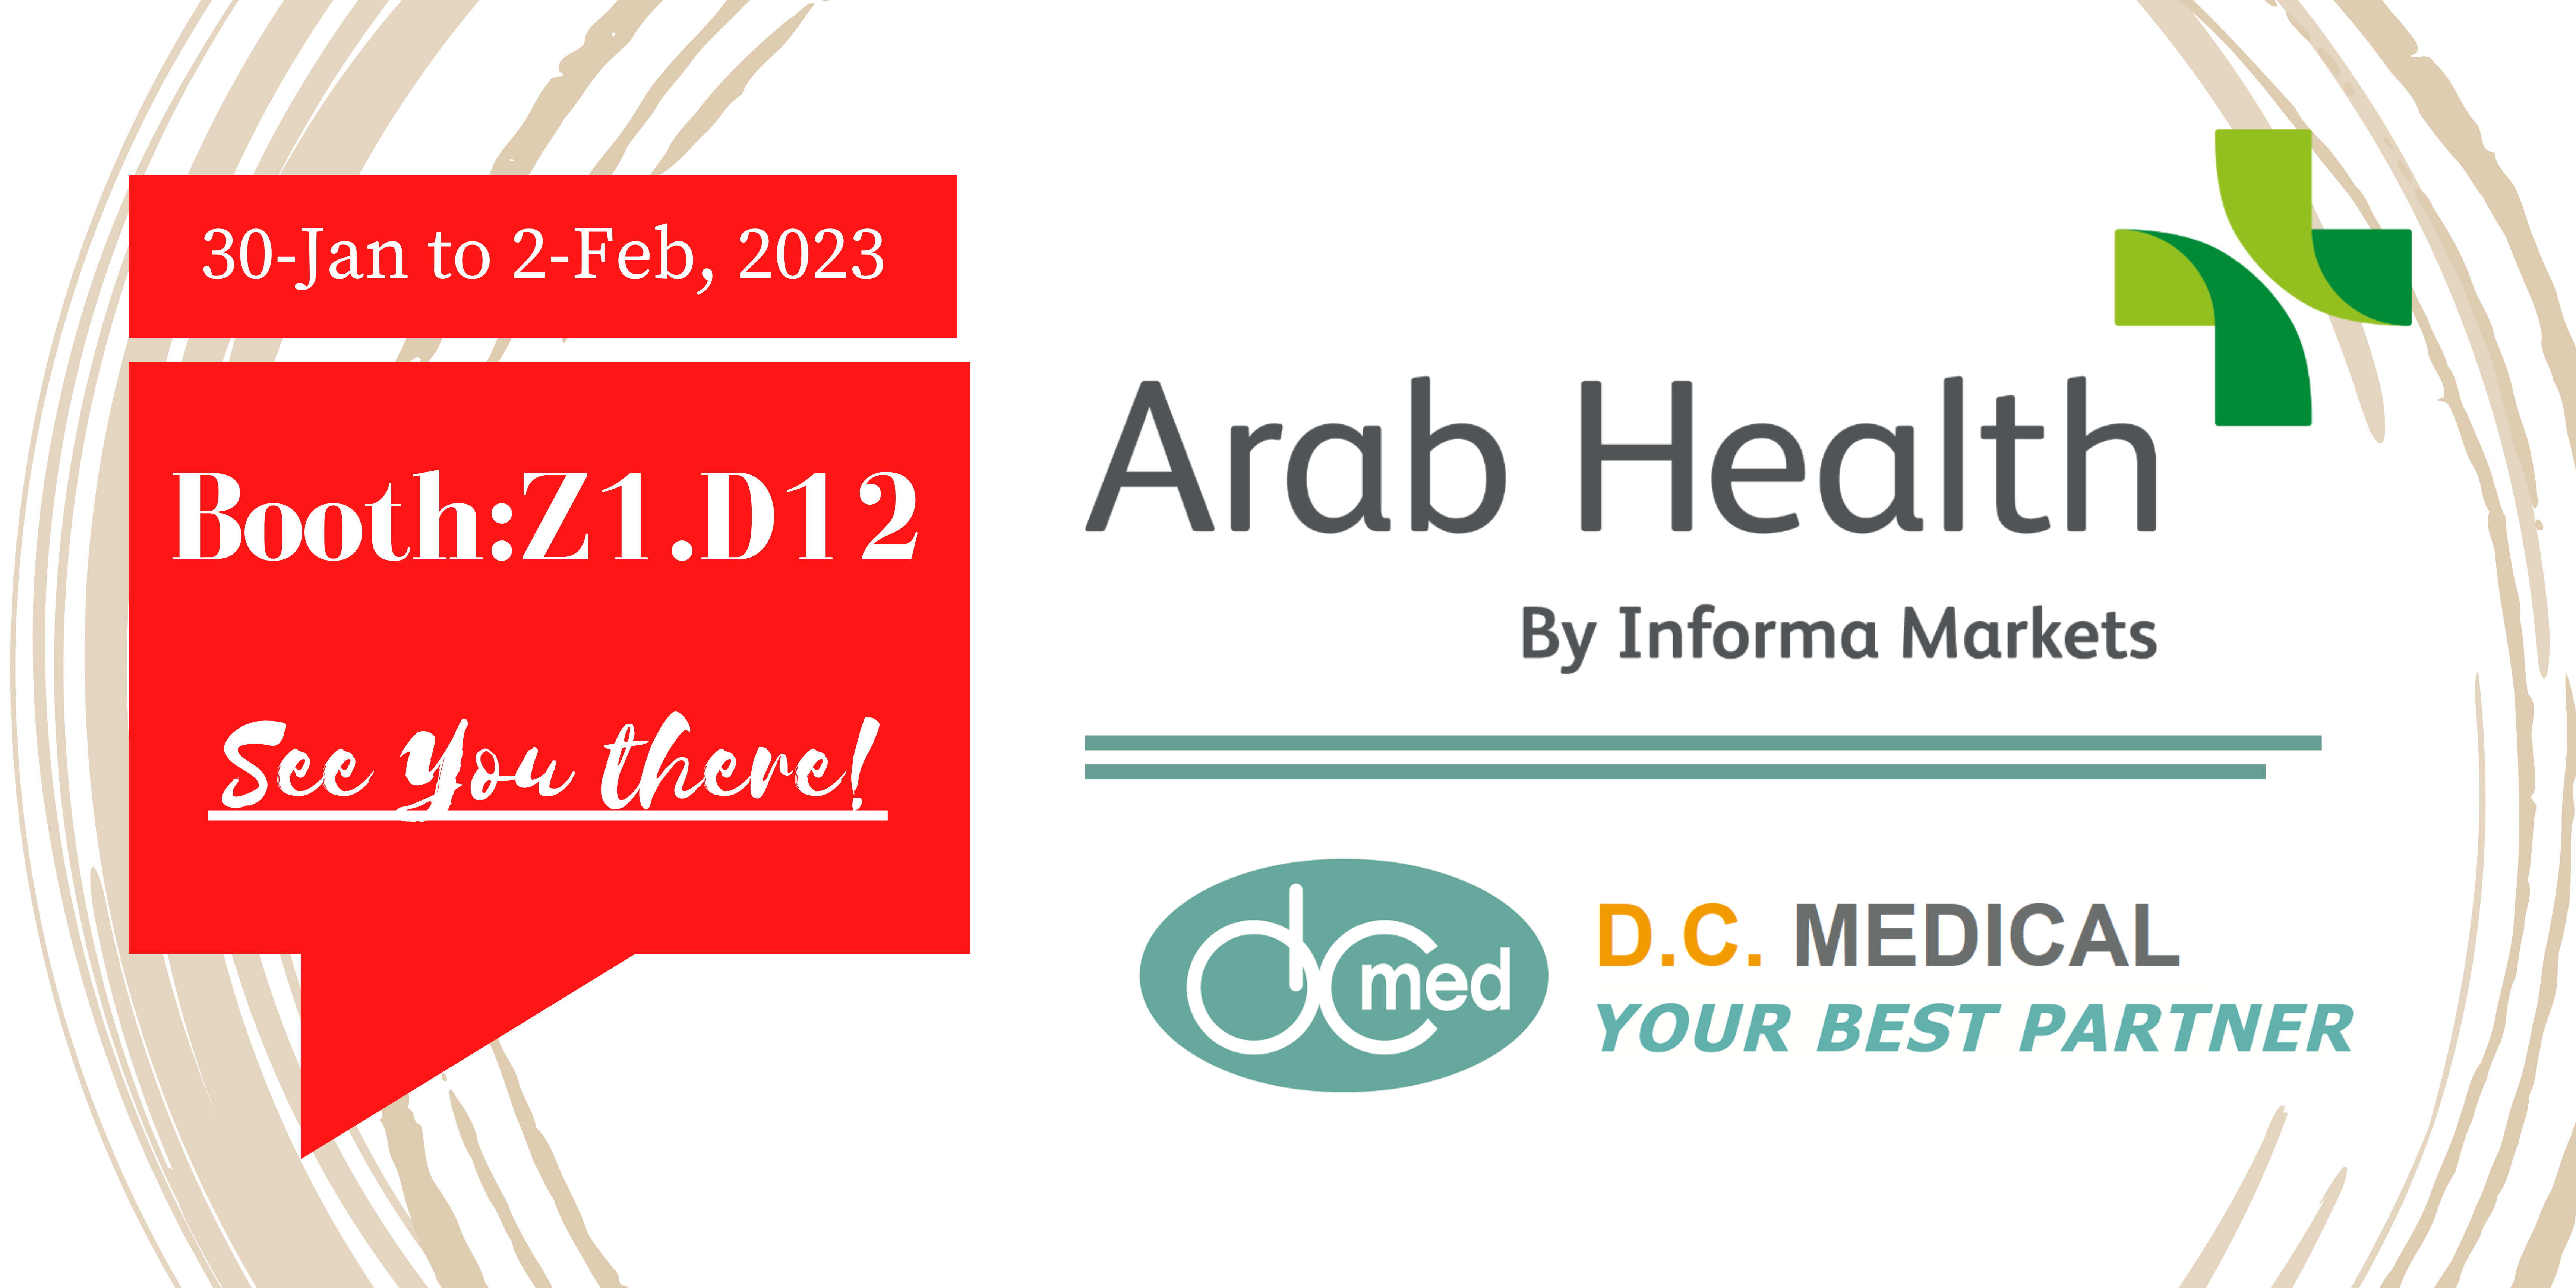 2023年1月 杜拜阿拉伯醫療展 (Arab Health) 